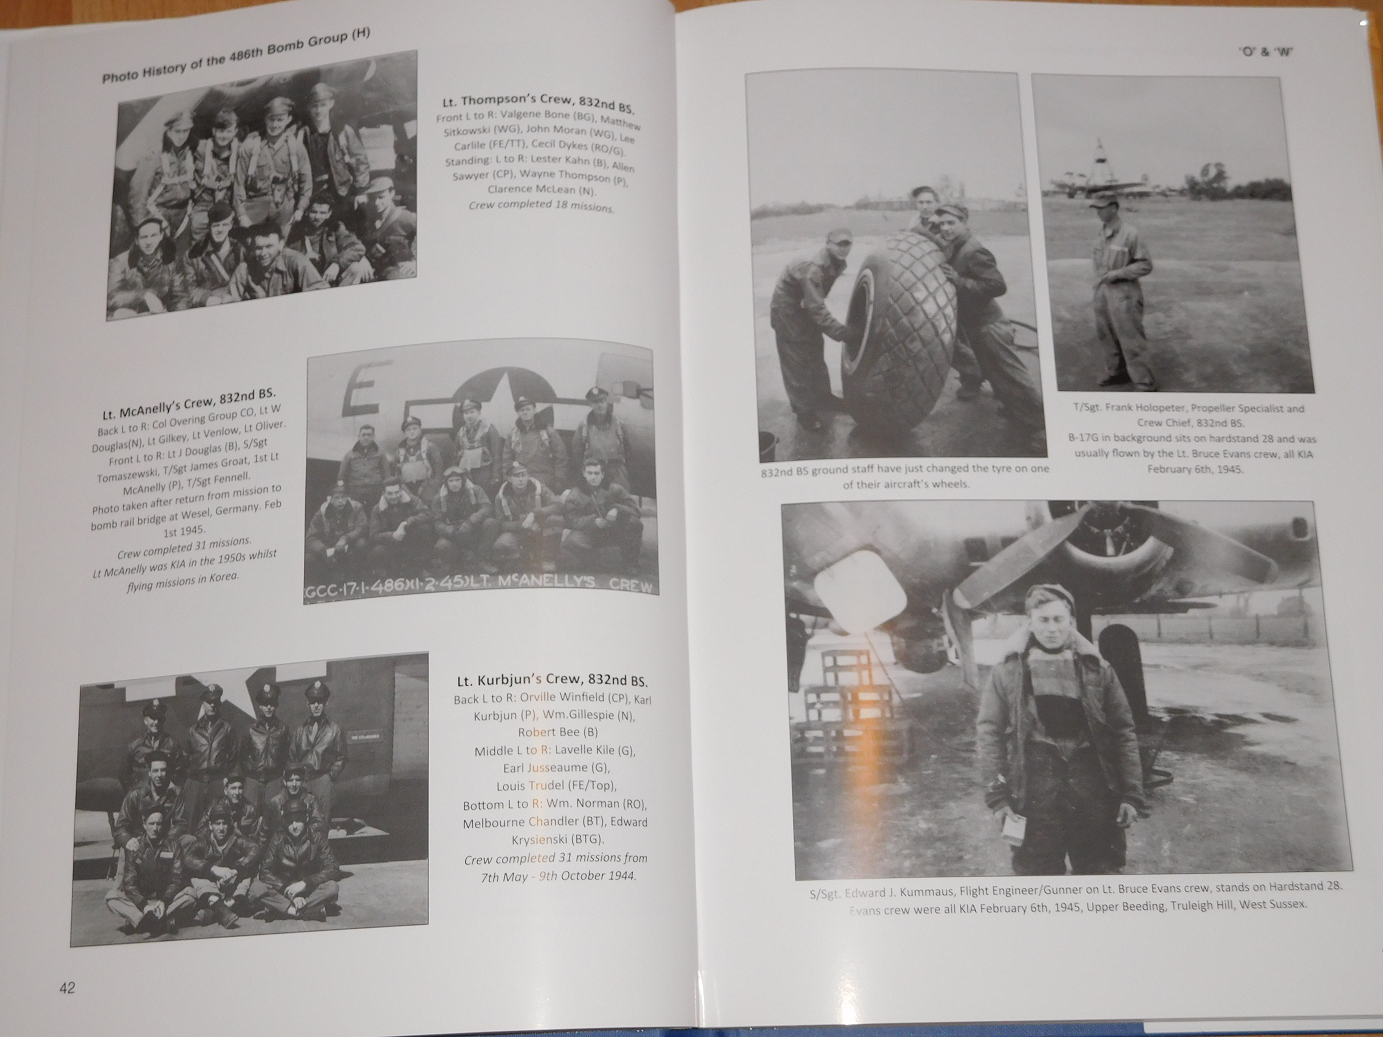 Osborn, Malcolm & Smith, Derek - Photo History of the 486th Bombardment Group (Heavy)